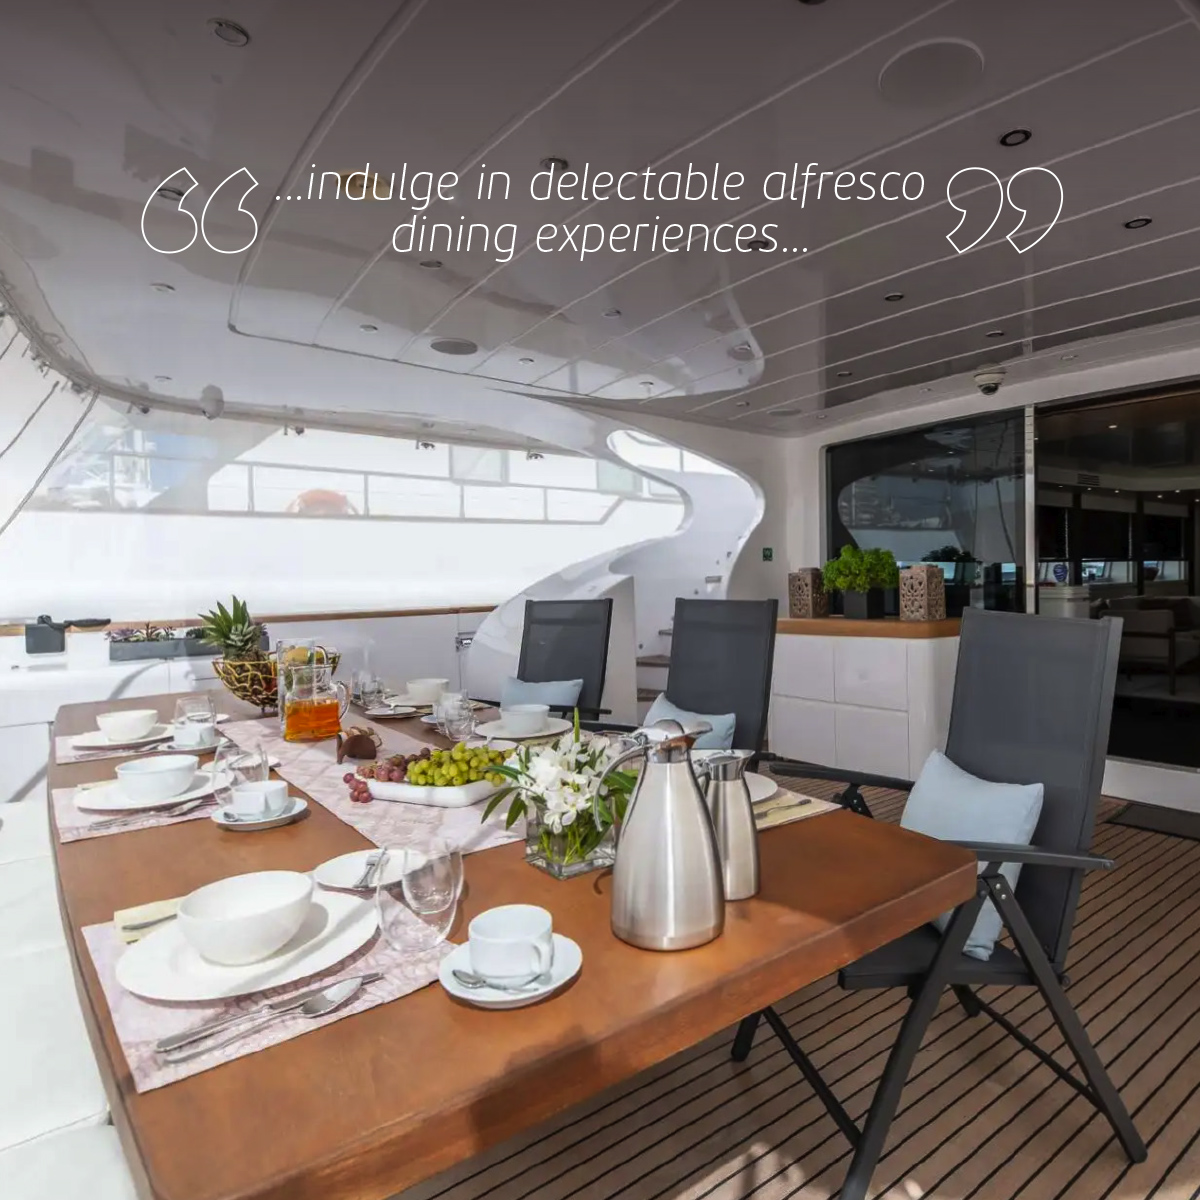 🆕 𝐍𝐄𝐖 𝐋𝐔𝐗𝐔𝐑𝐘 𝐂𝐑𝐄𝐖𝐄𝐃 𝐄𝐍𝐓𝐑𝐘 💎
𝗠/𝗬 '𝗣𝗔𝗥𝗘𝗔𝗞𝗜 𝗜𝗜' - 𝗠𝗔𝗜𝗢𝗥𝗔 𝟭𝟮𝟲

A #superyacht Saga Awaits 🛥️
➡️ 𝗚𝗨𝗘𝗦𝗧 𝗔𝗖𝗖𝗢𝗠𝗠𝗢𝗗𝗔𝗧𝗜𝗢𝗡
▪️ 12 guests / 6 cabins / crew of 7

#motoryacht #greece #luxuryyacht #luxuryrental #luxuryvacation #Travel